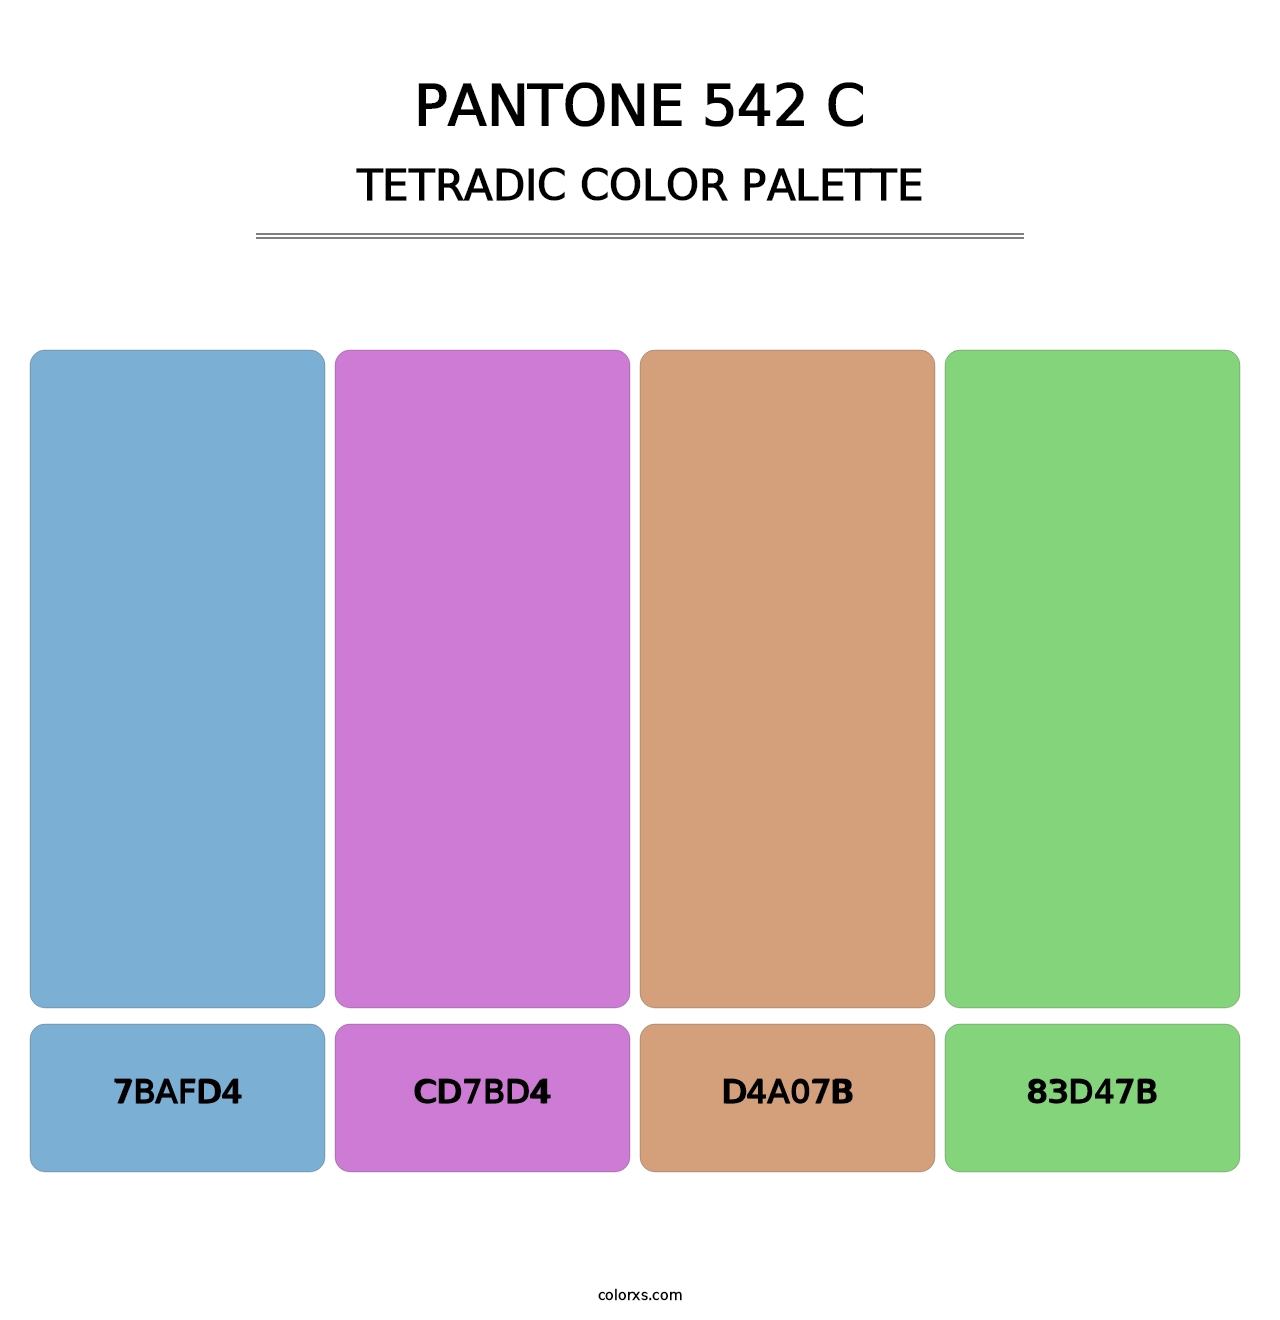 PANTONE 542 C - Tetradic Color Palette